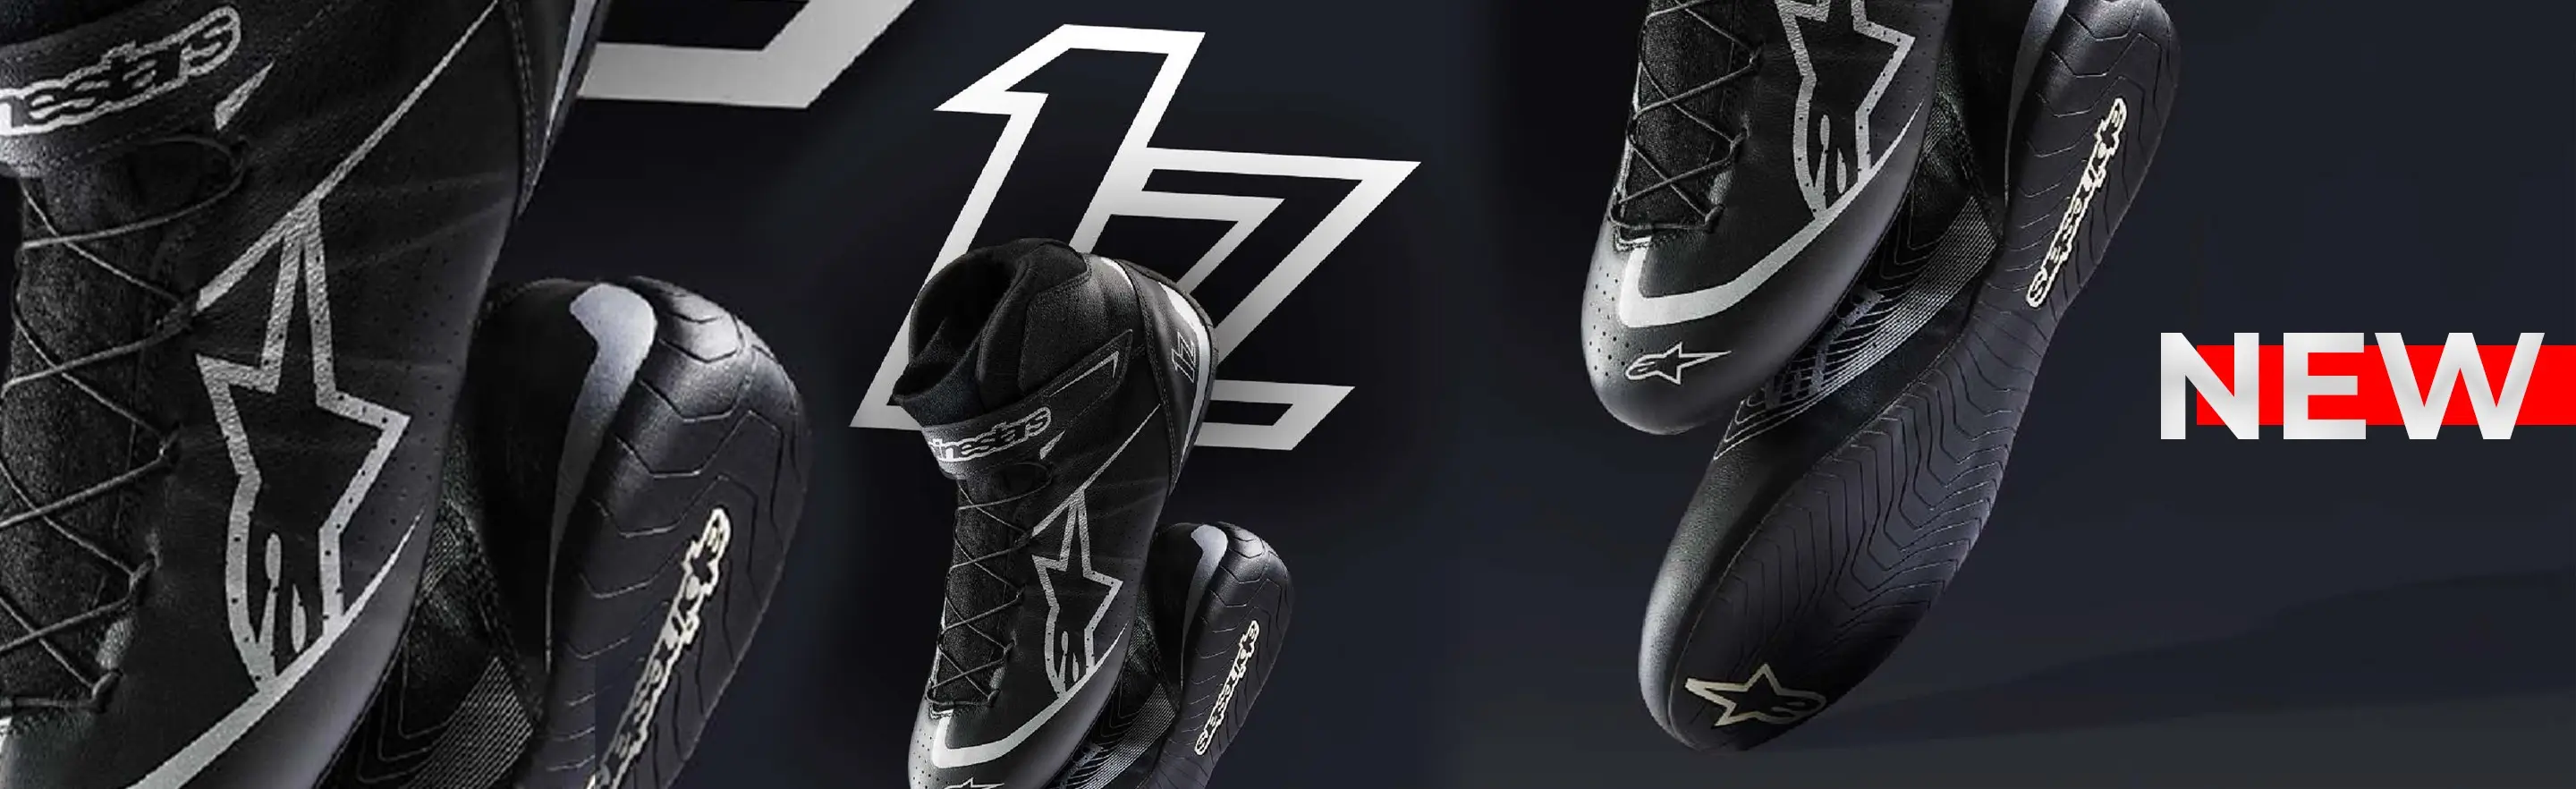 Alpinestars Tech-1 Z V3 racing boots